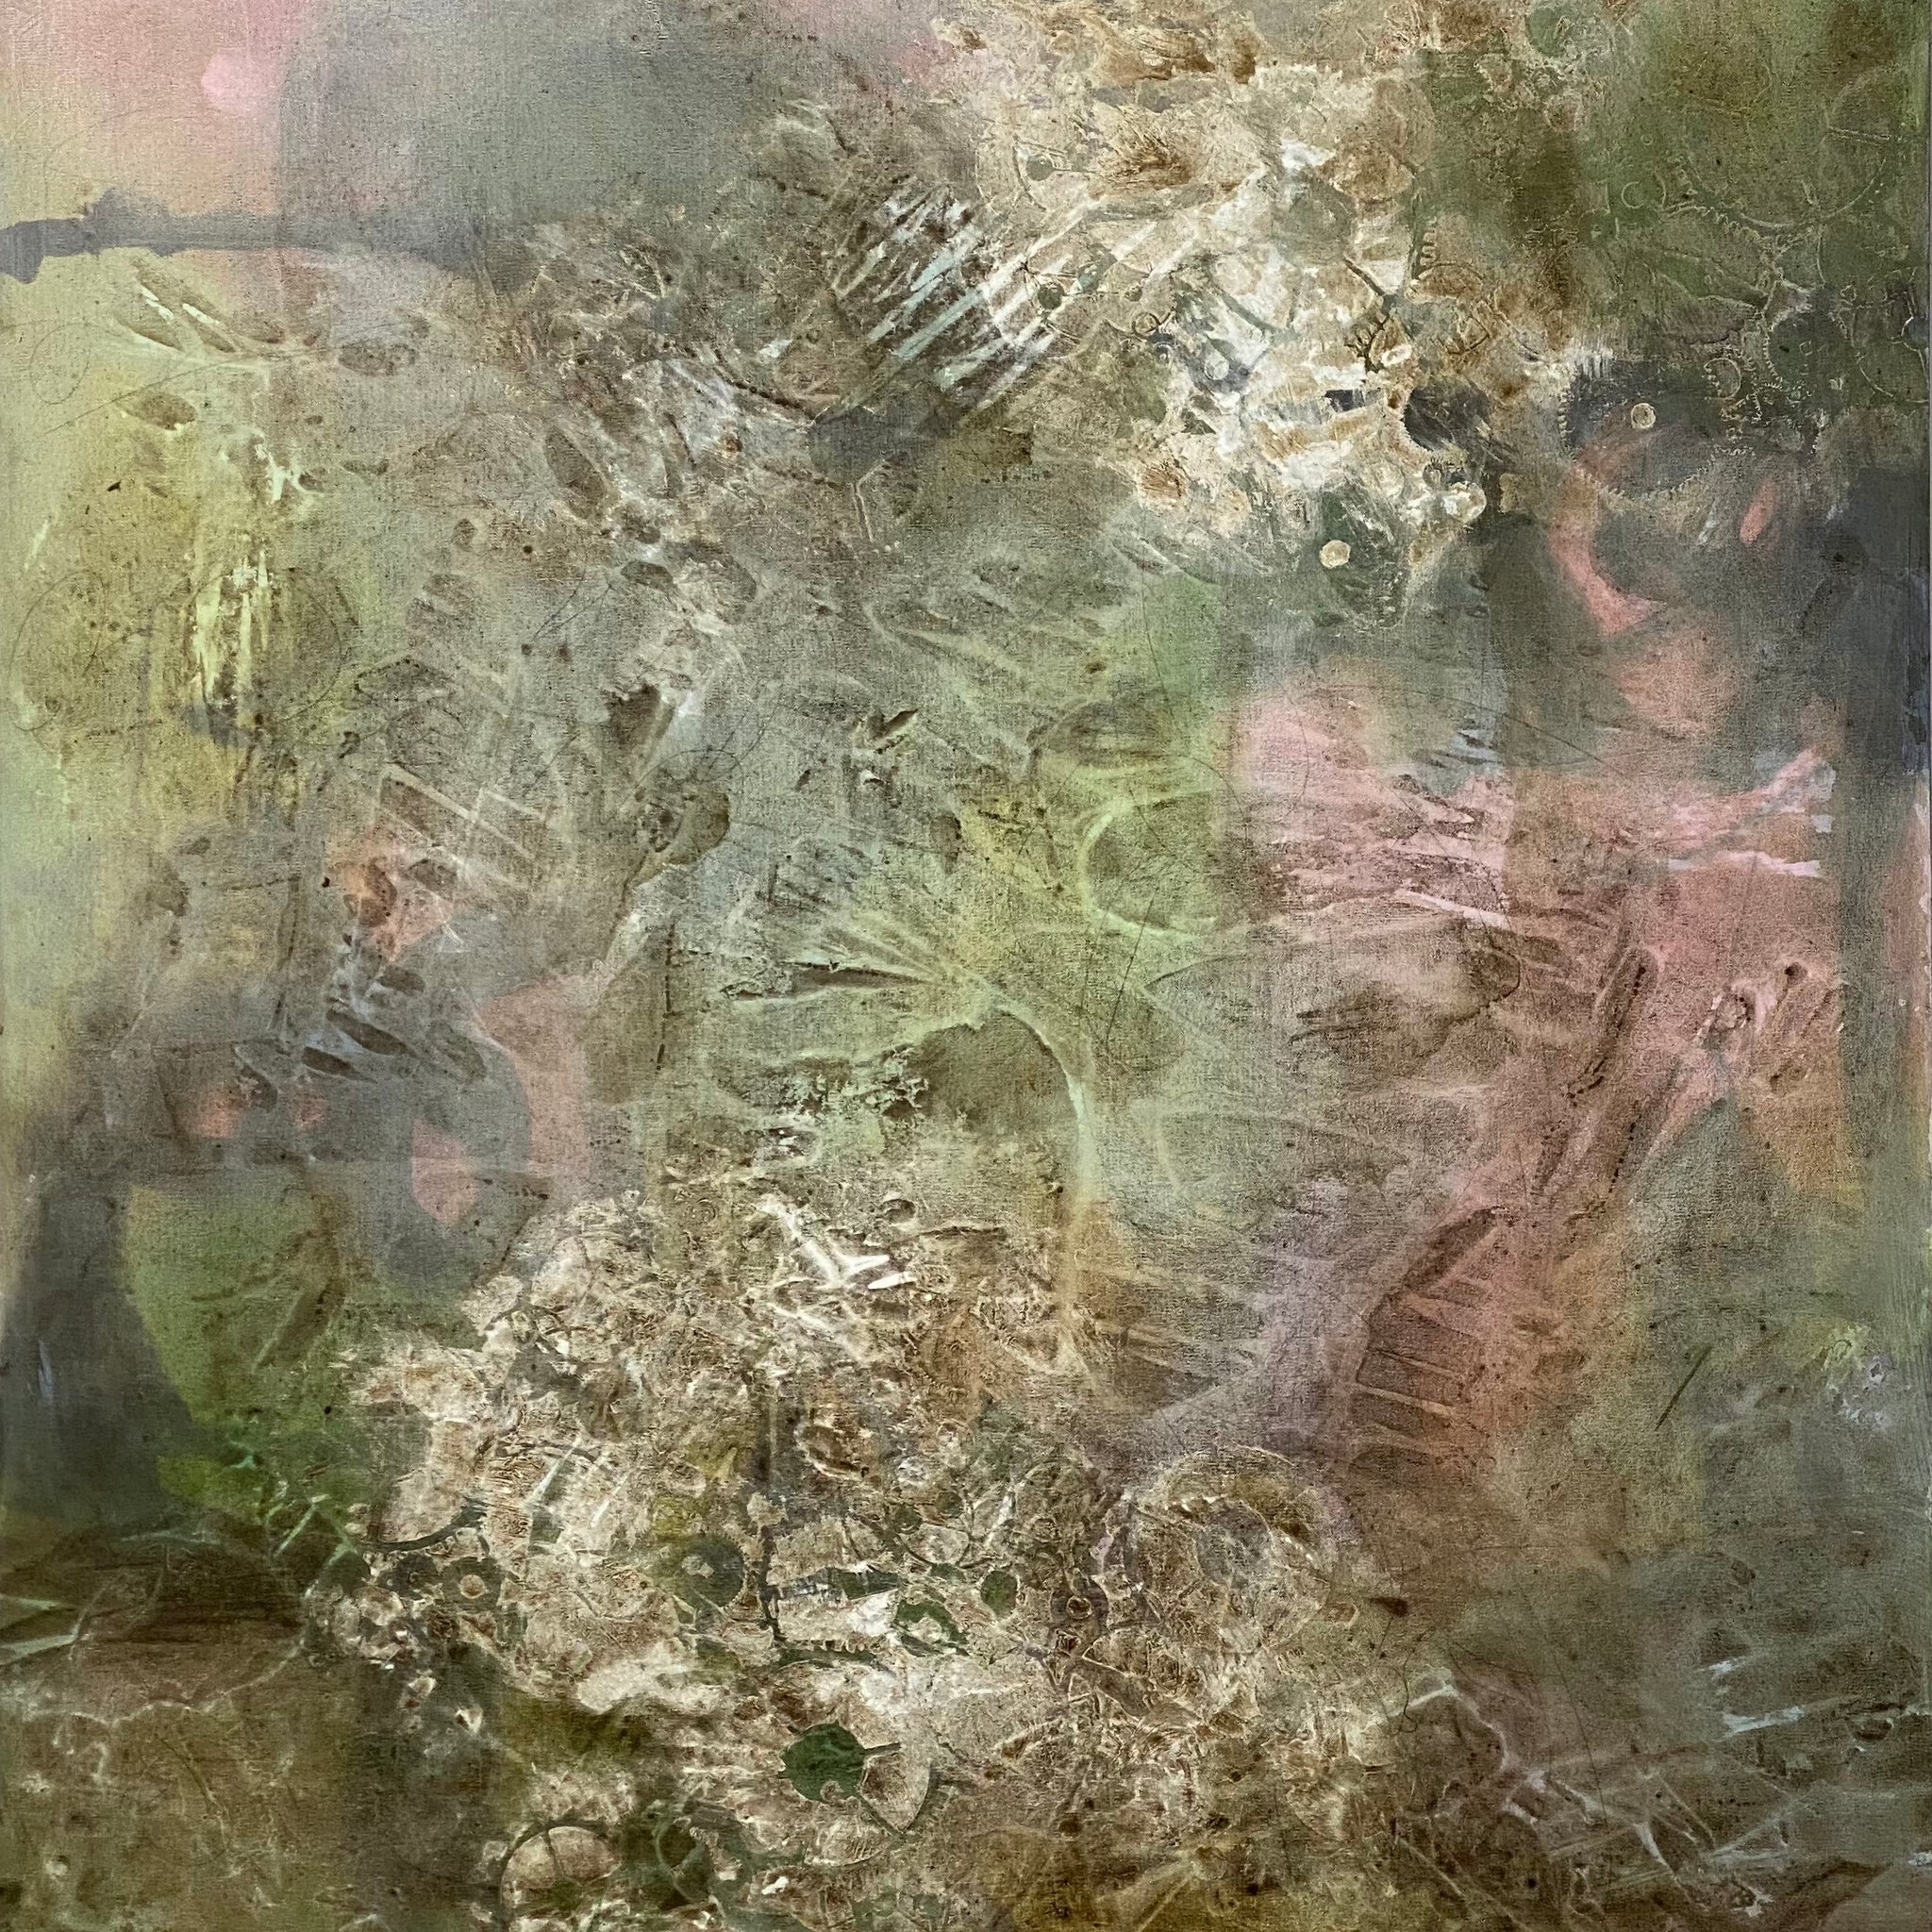 Juanita Bellavance, Earth’s foliage, 2020, Acrylic on canvas, 60 x 48 inches